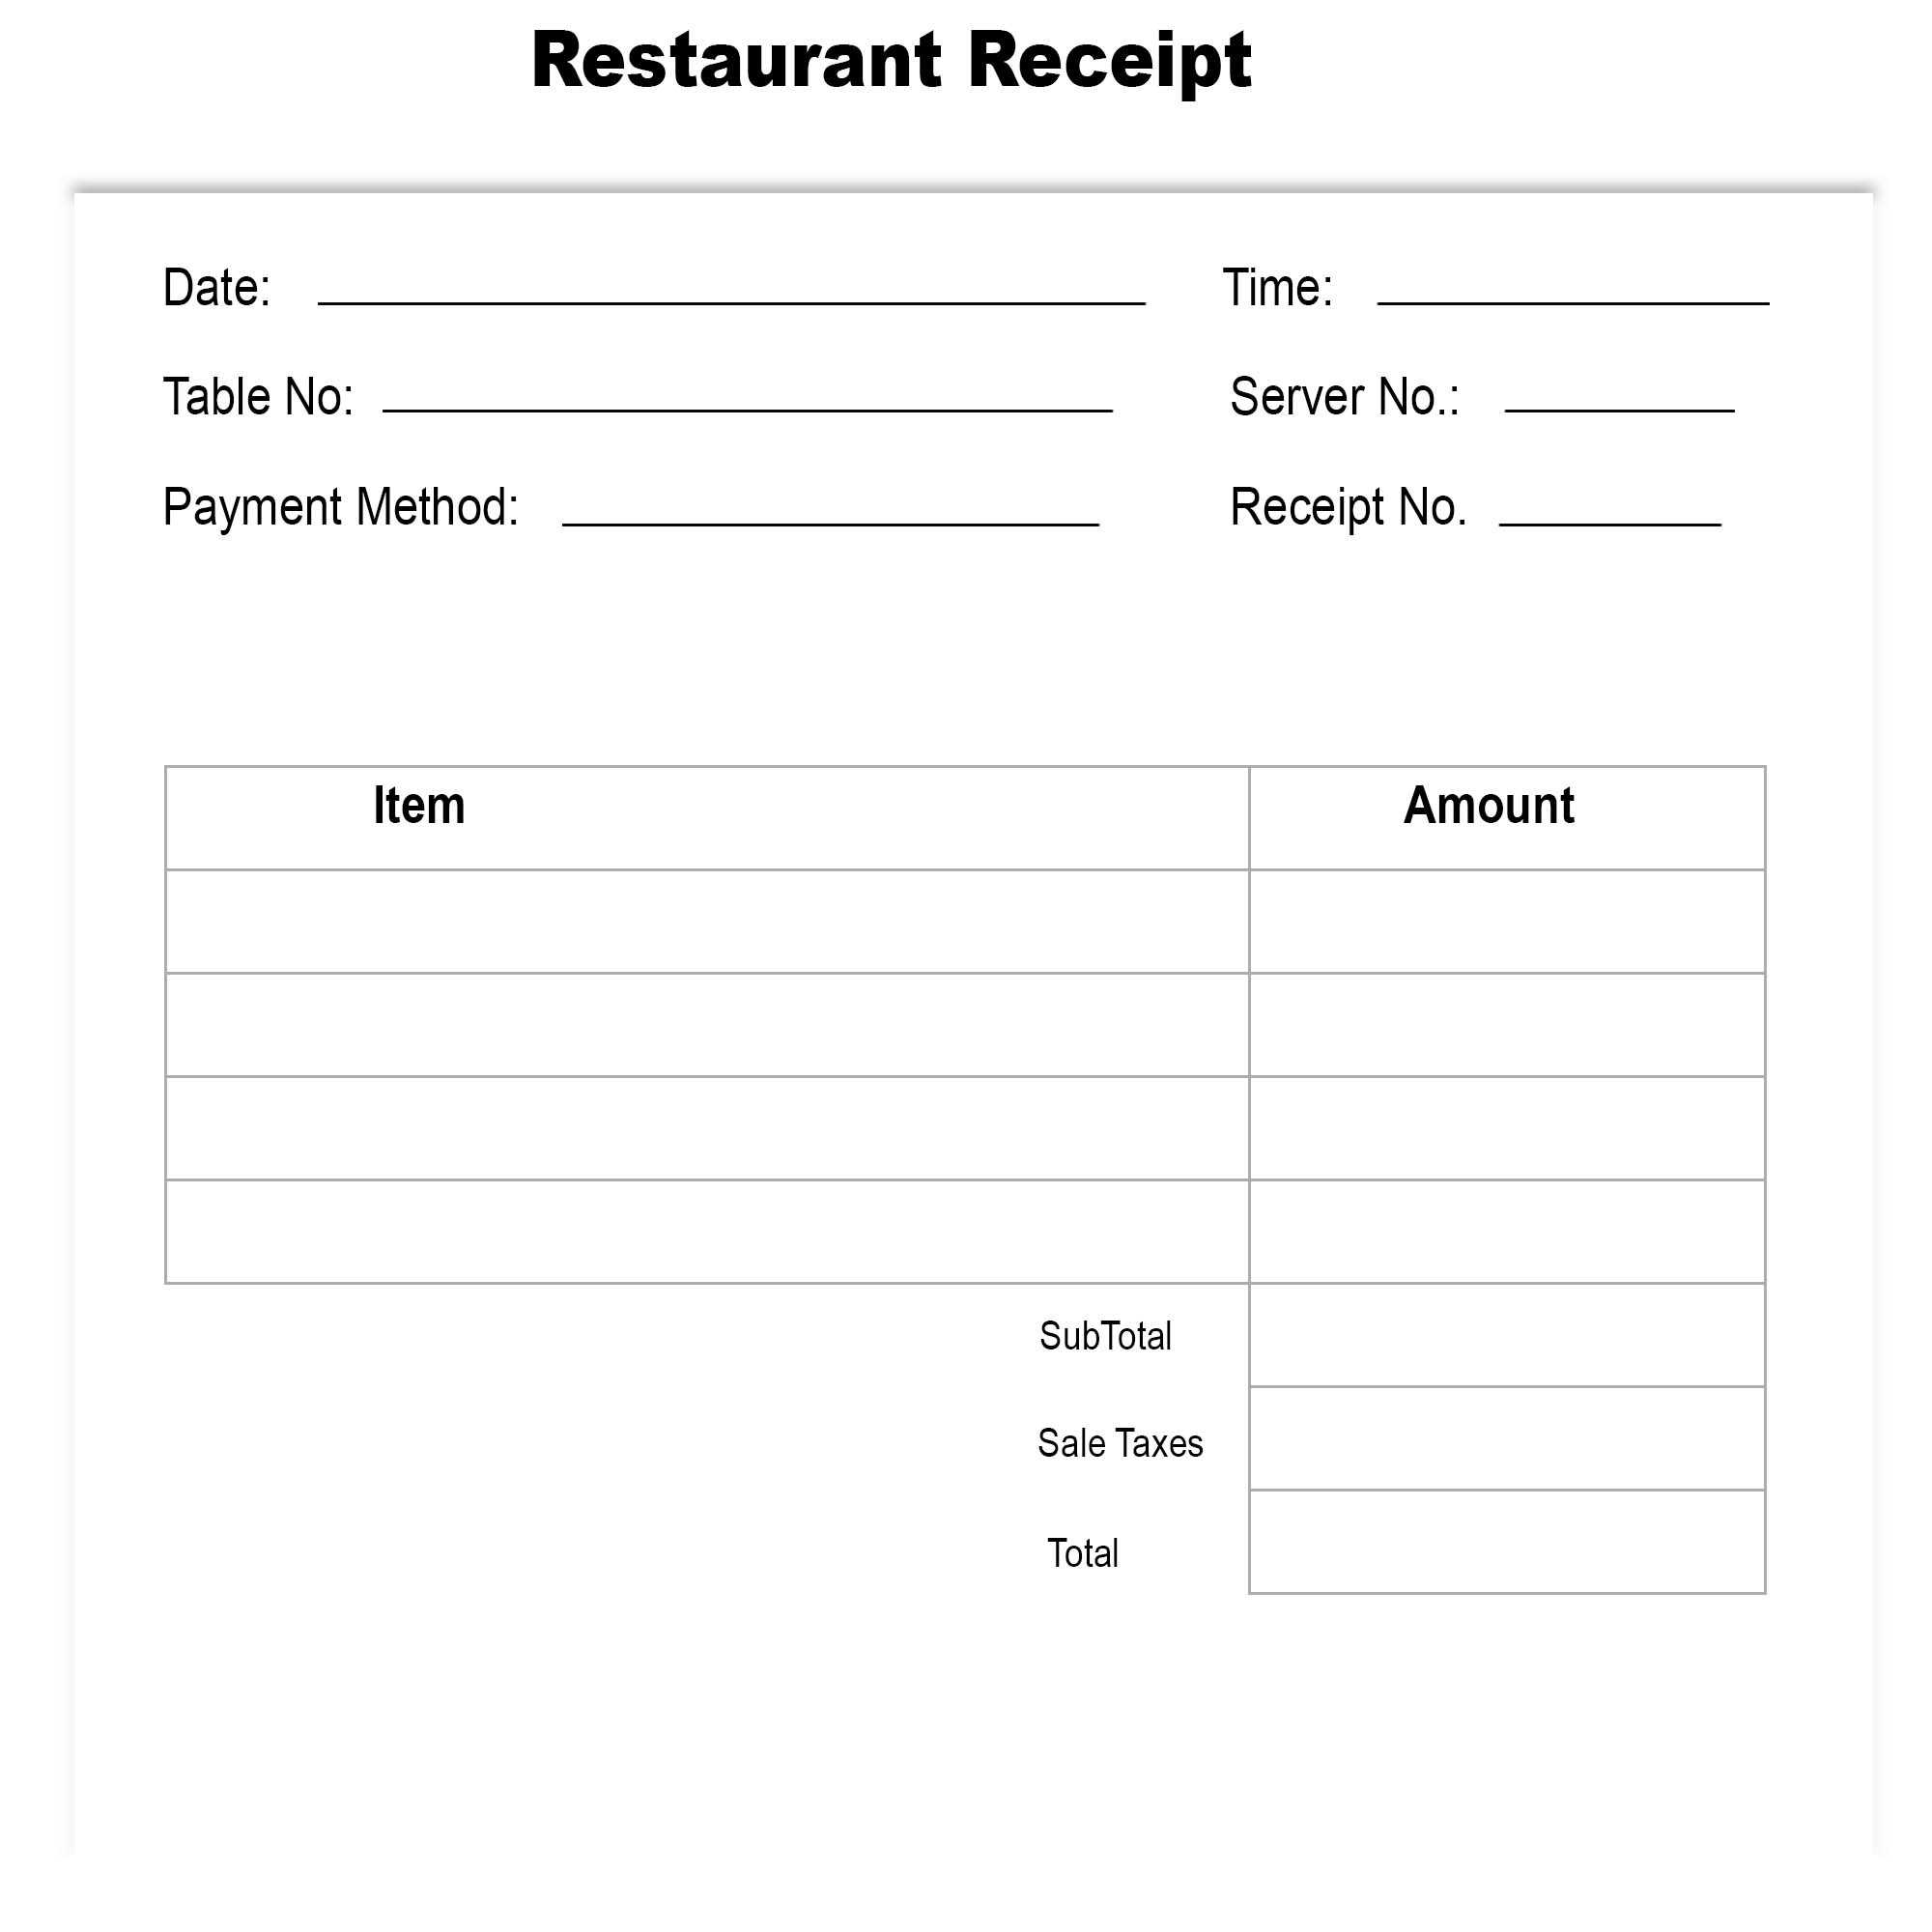 Restaurant Receipt Template Excel | The Receipt Template Within Blank Taxi Receipt Template